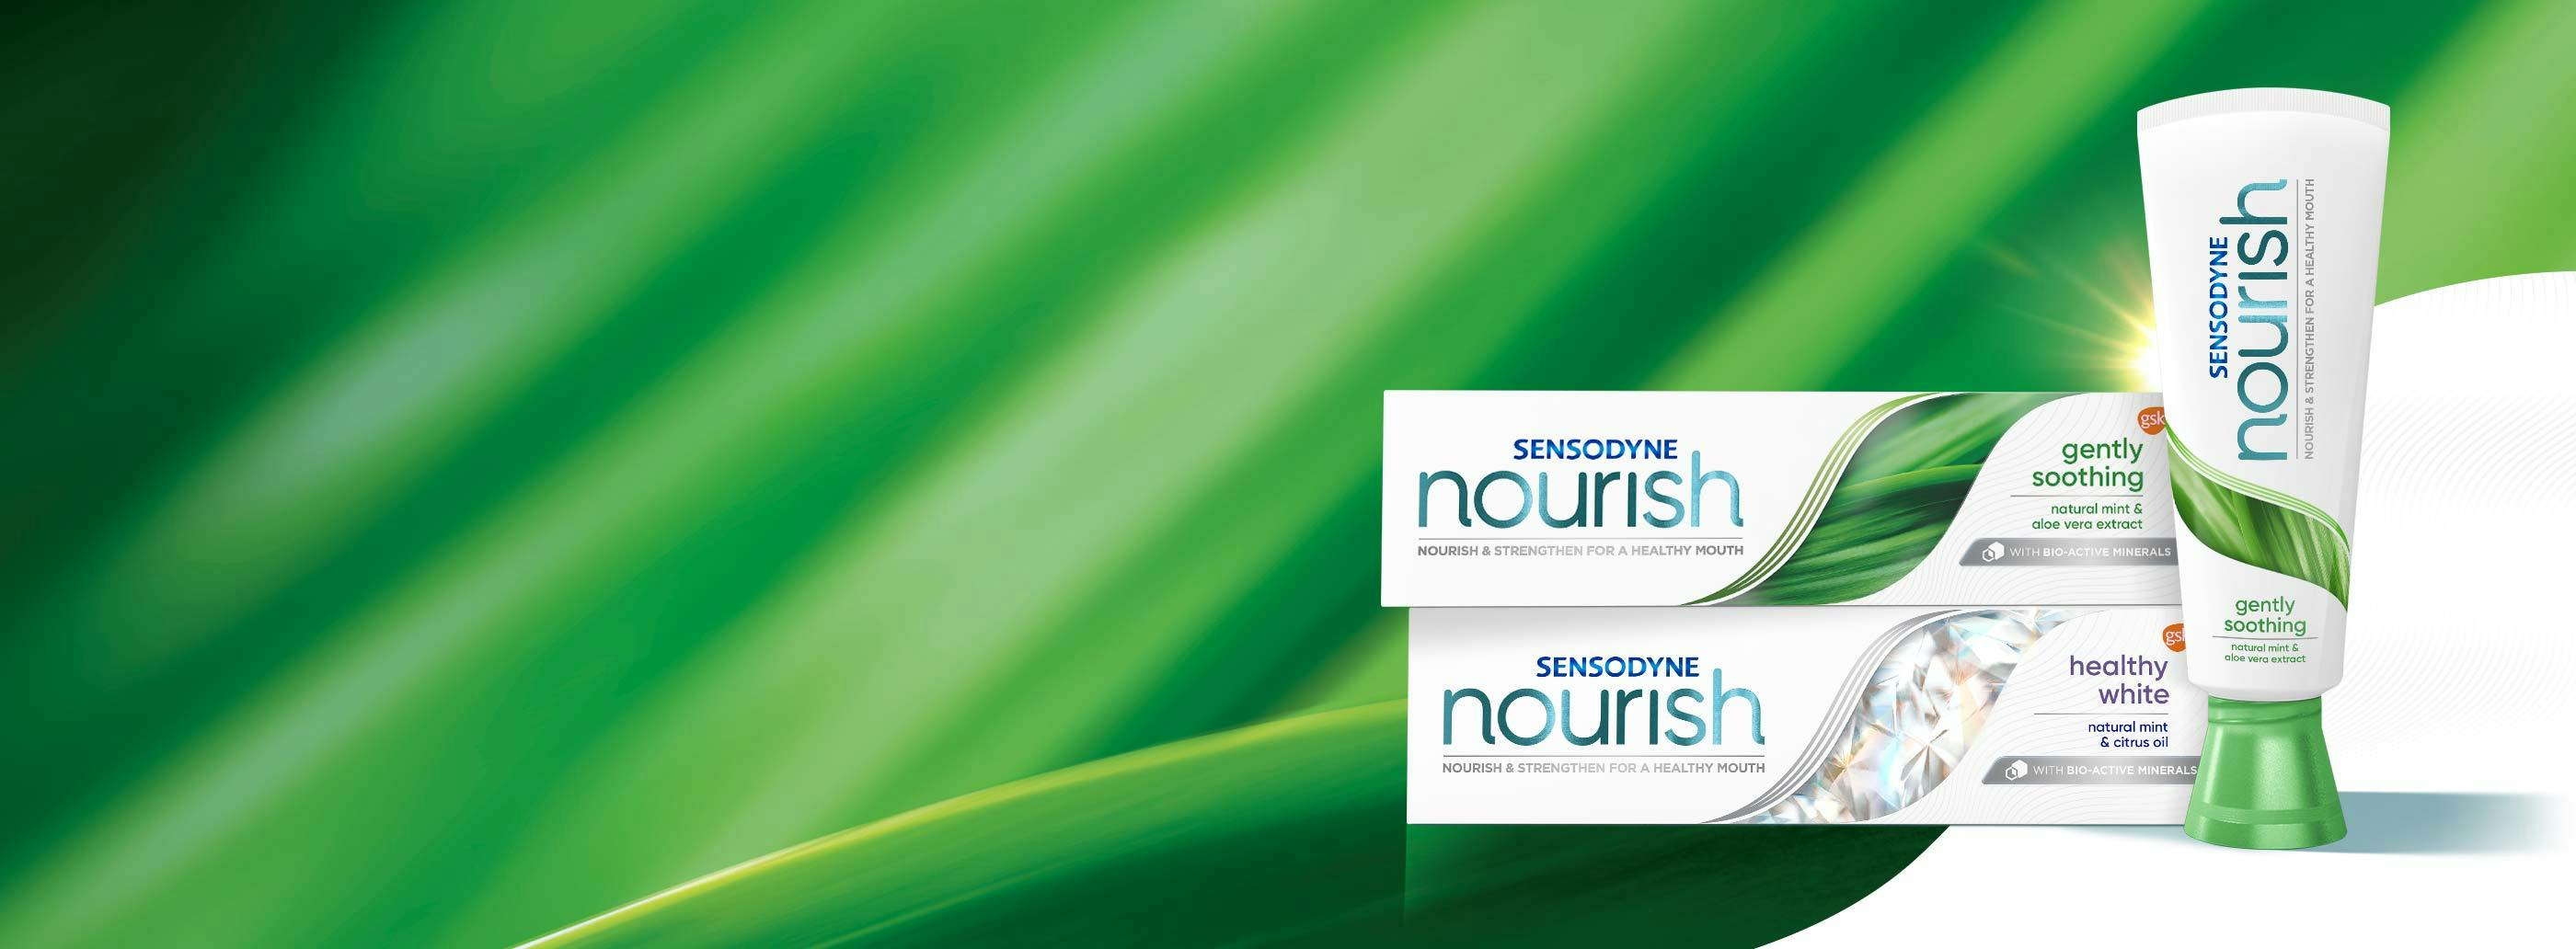 Sensodyne Nourish product range